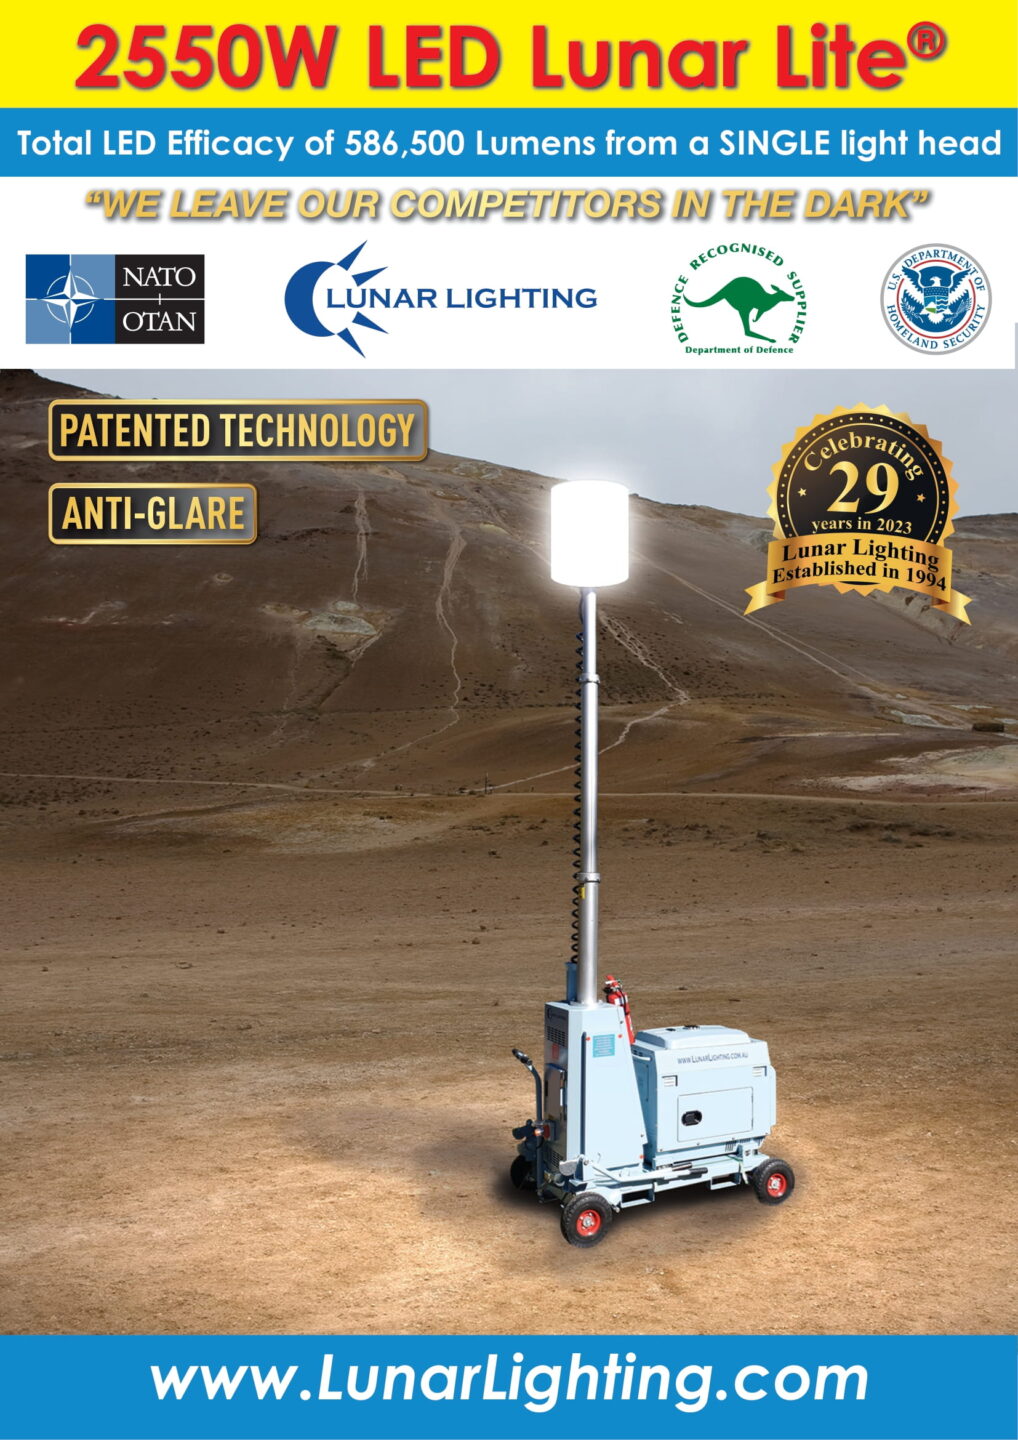 2550W-LED-Lunar-Lighting-Tower-Trolley-mounted-USA-1